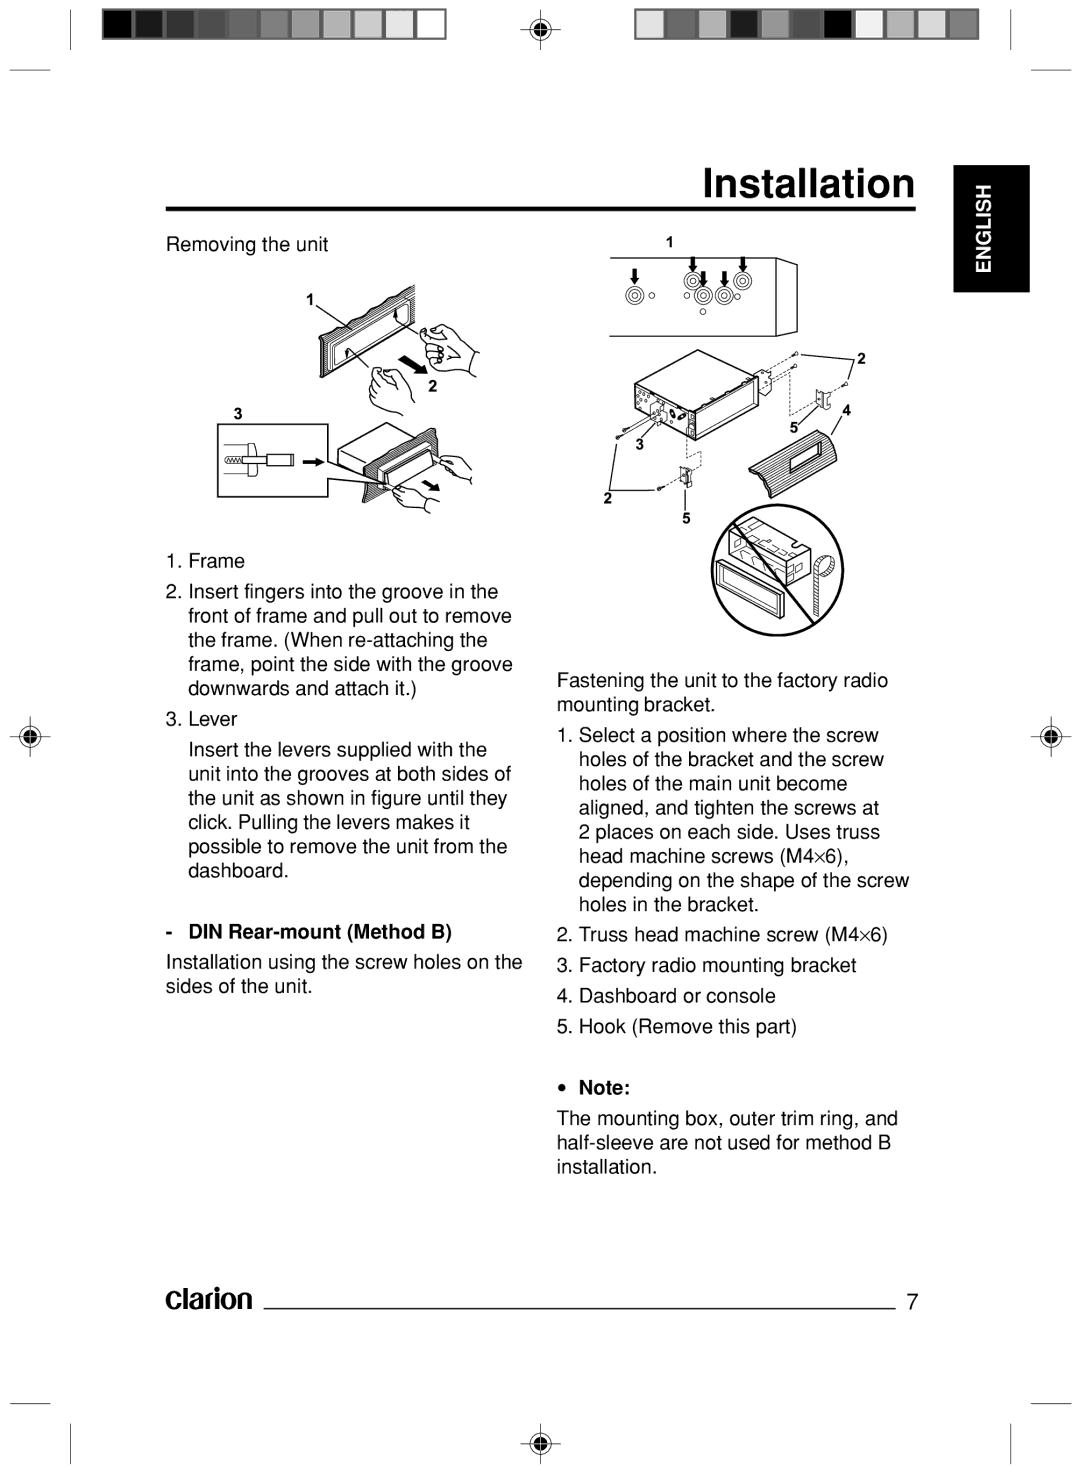 Clarion VS738 owner manual Removing the unit Frame, DIN Rear-mount Method B 